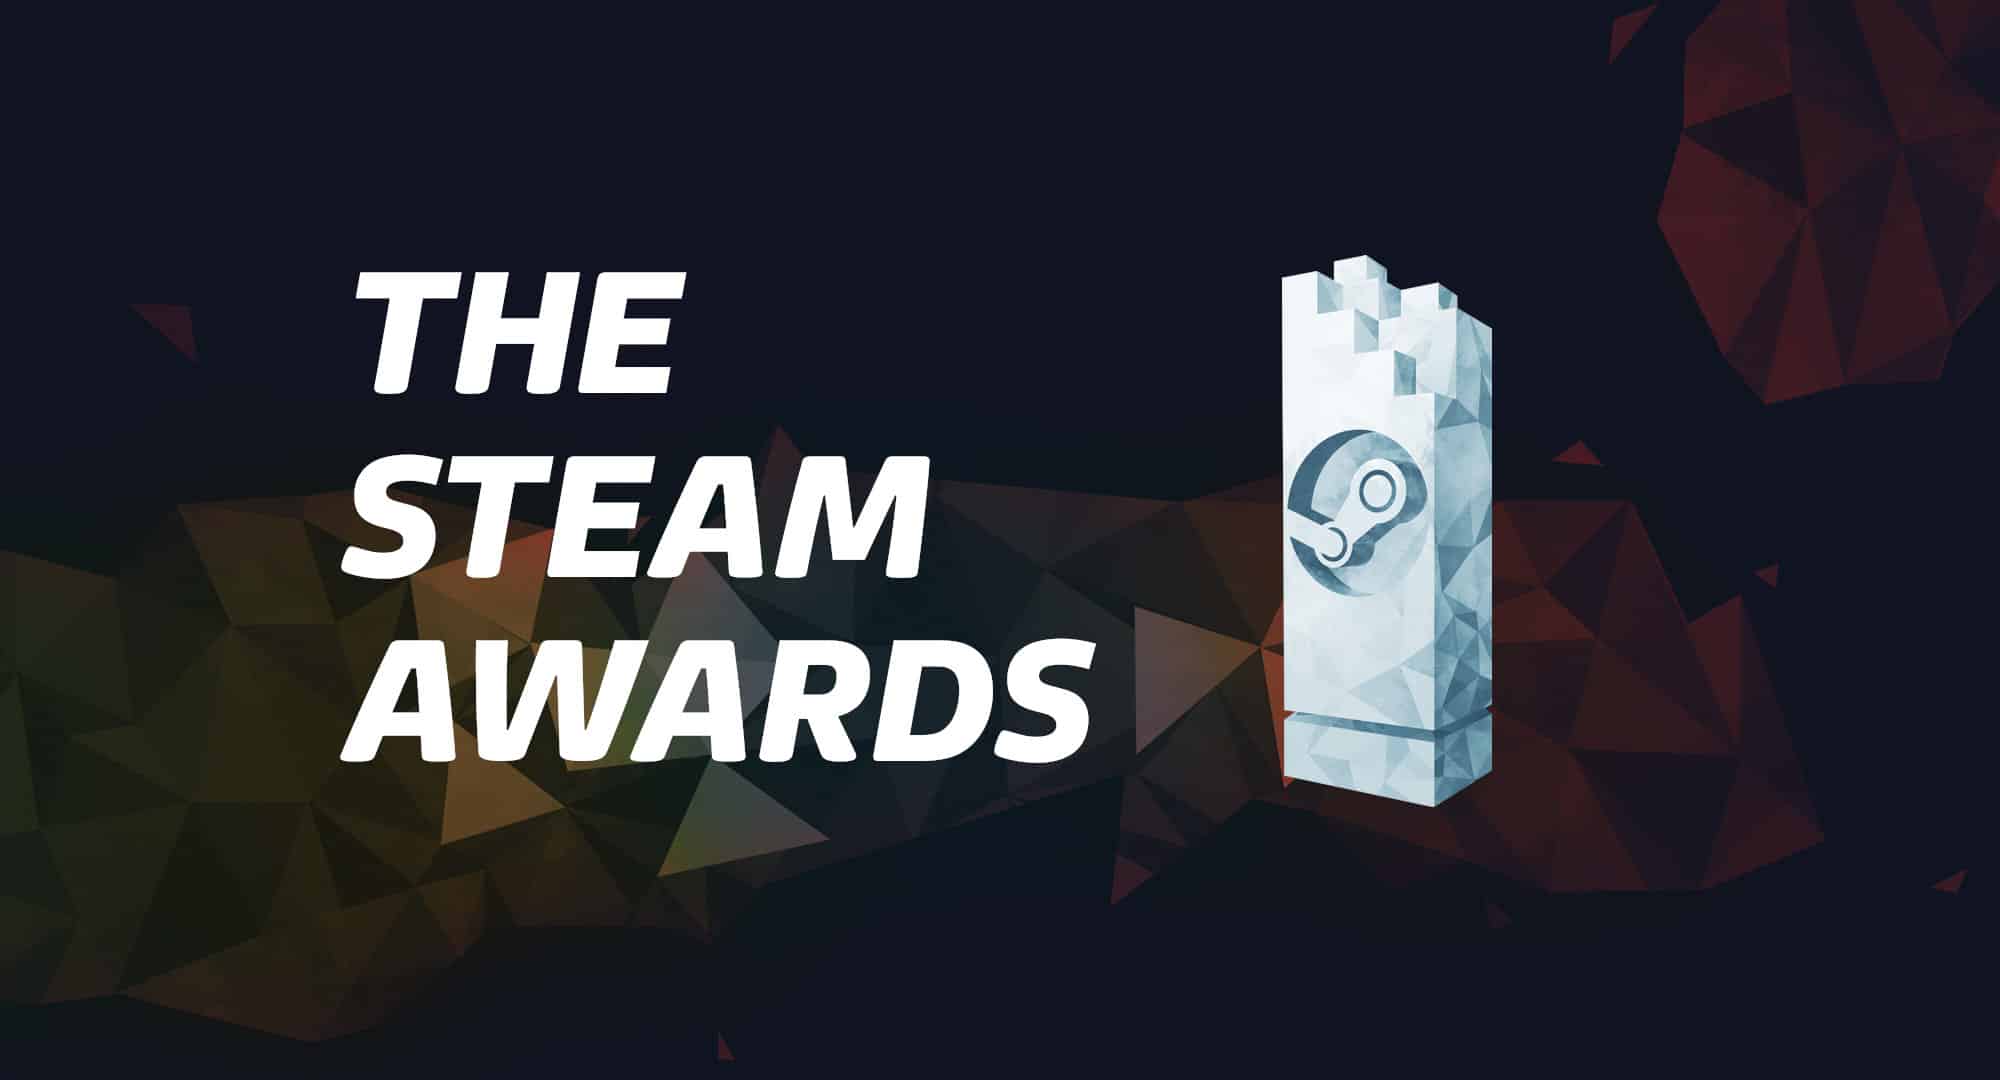 Steam Awards 2022